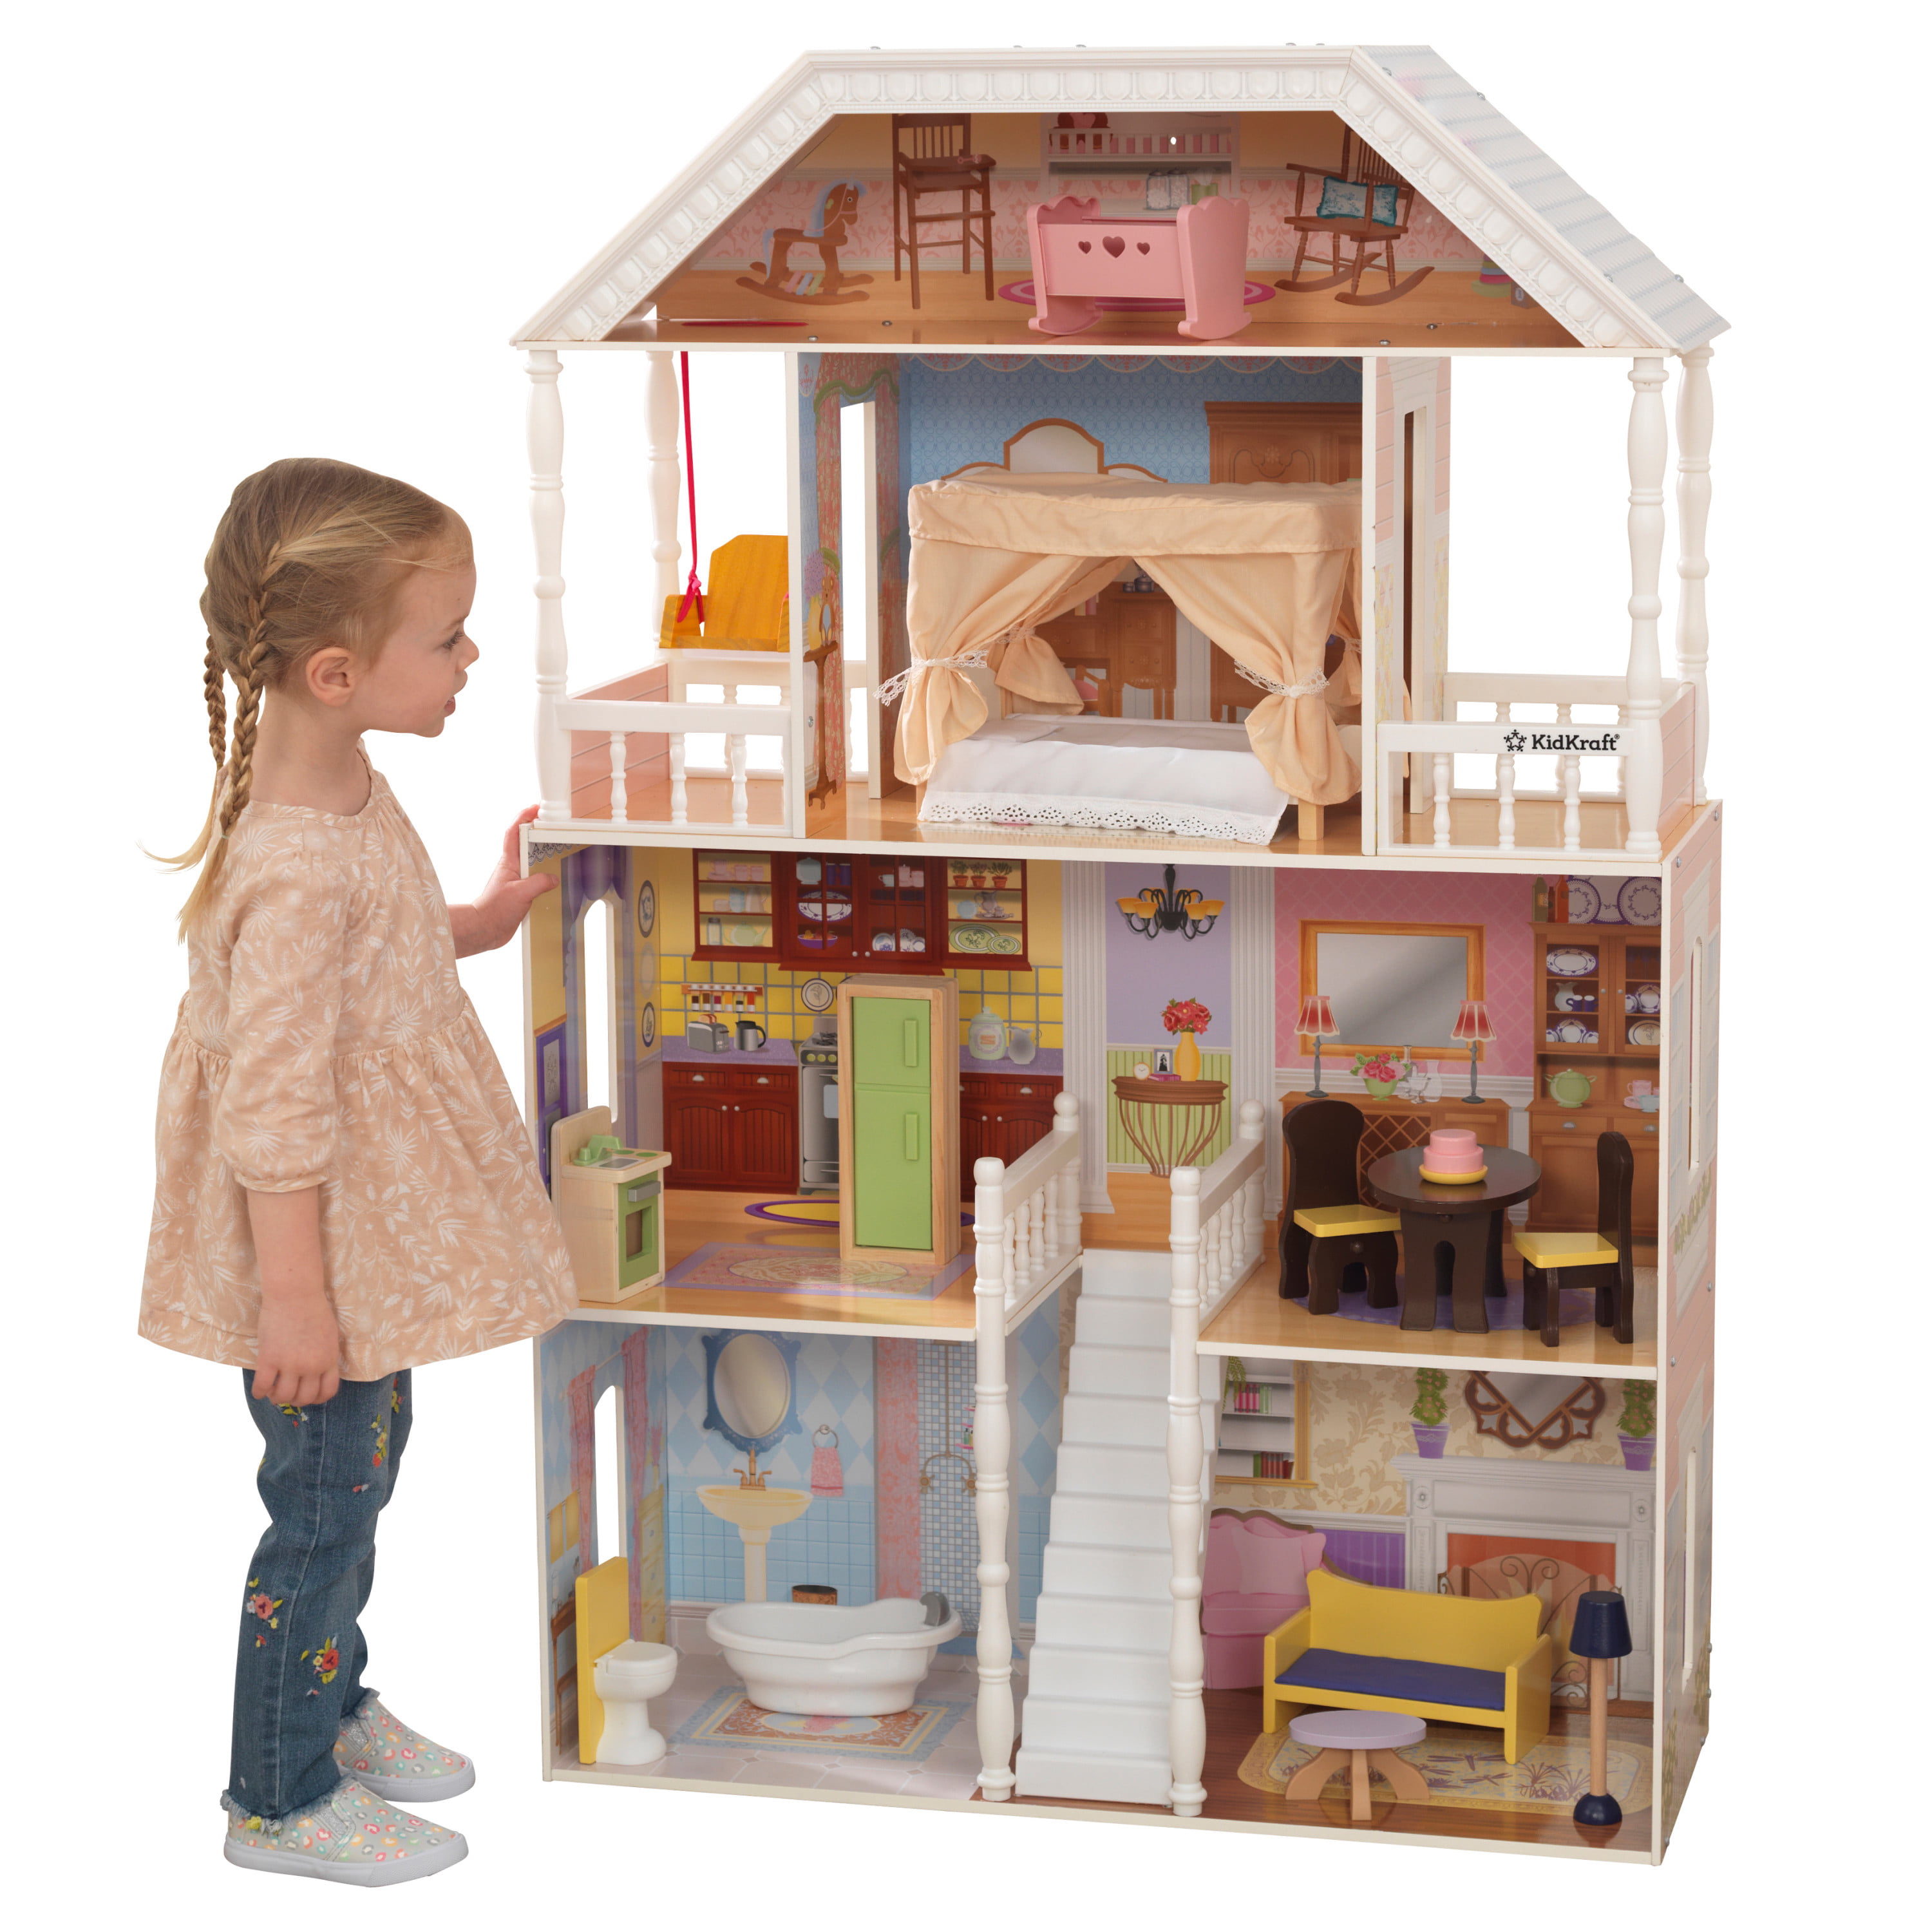 Dollhouse Miniature Pour Over Coffee Set Mini Dolls House Toy Accessories 